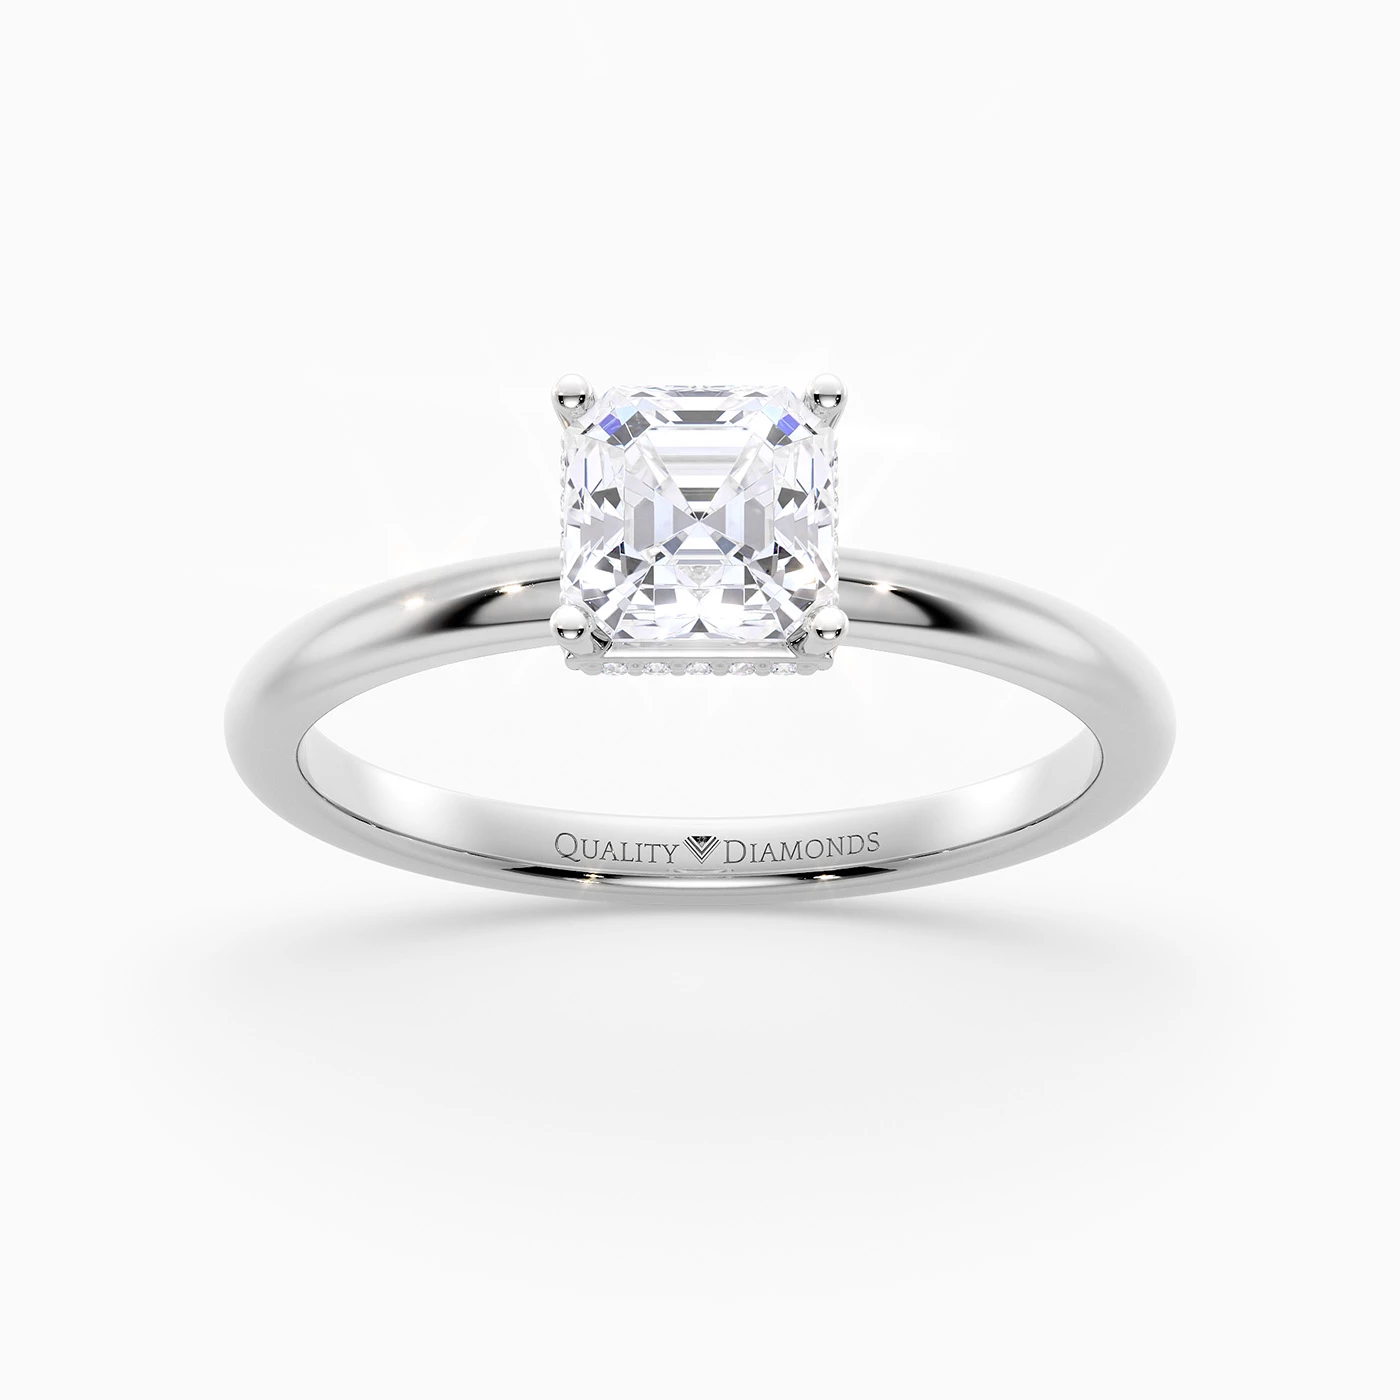 Asscher Liraz Hidden Halo Diamond Ring in Platinum